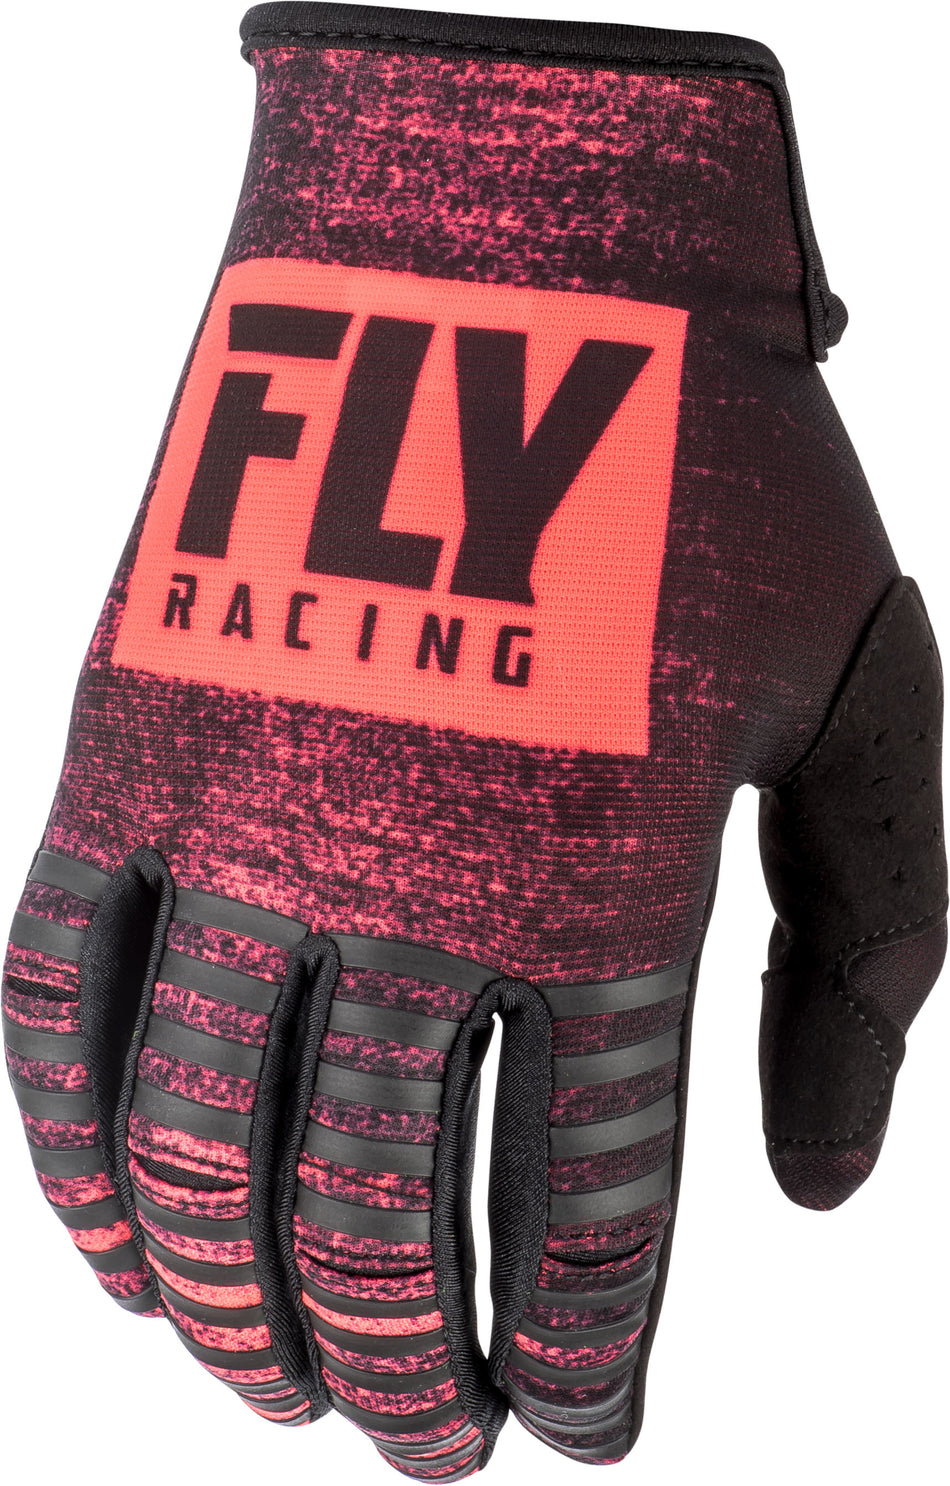 FLY RACING Kinetic Noiz Gloves Neon Red/Black Sz 12 372-51212